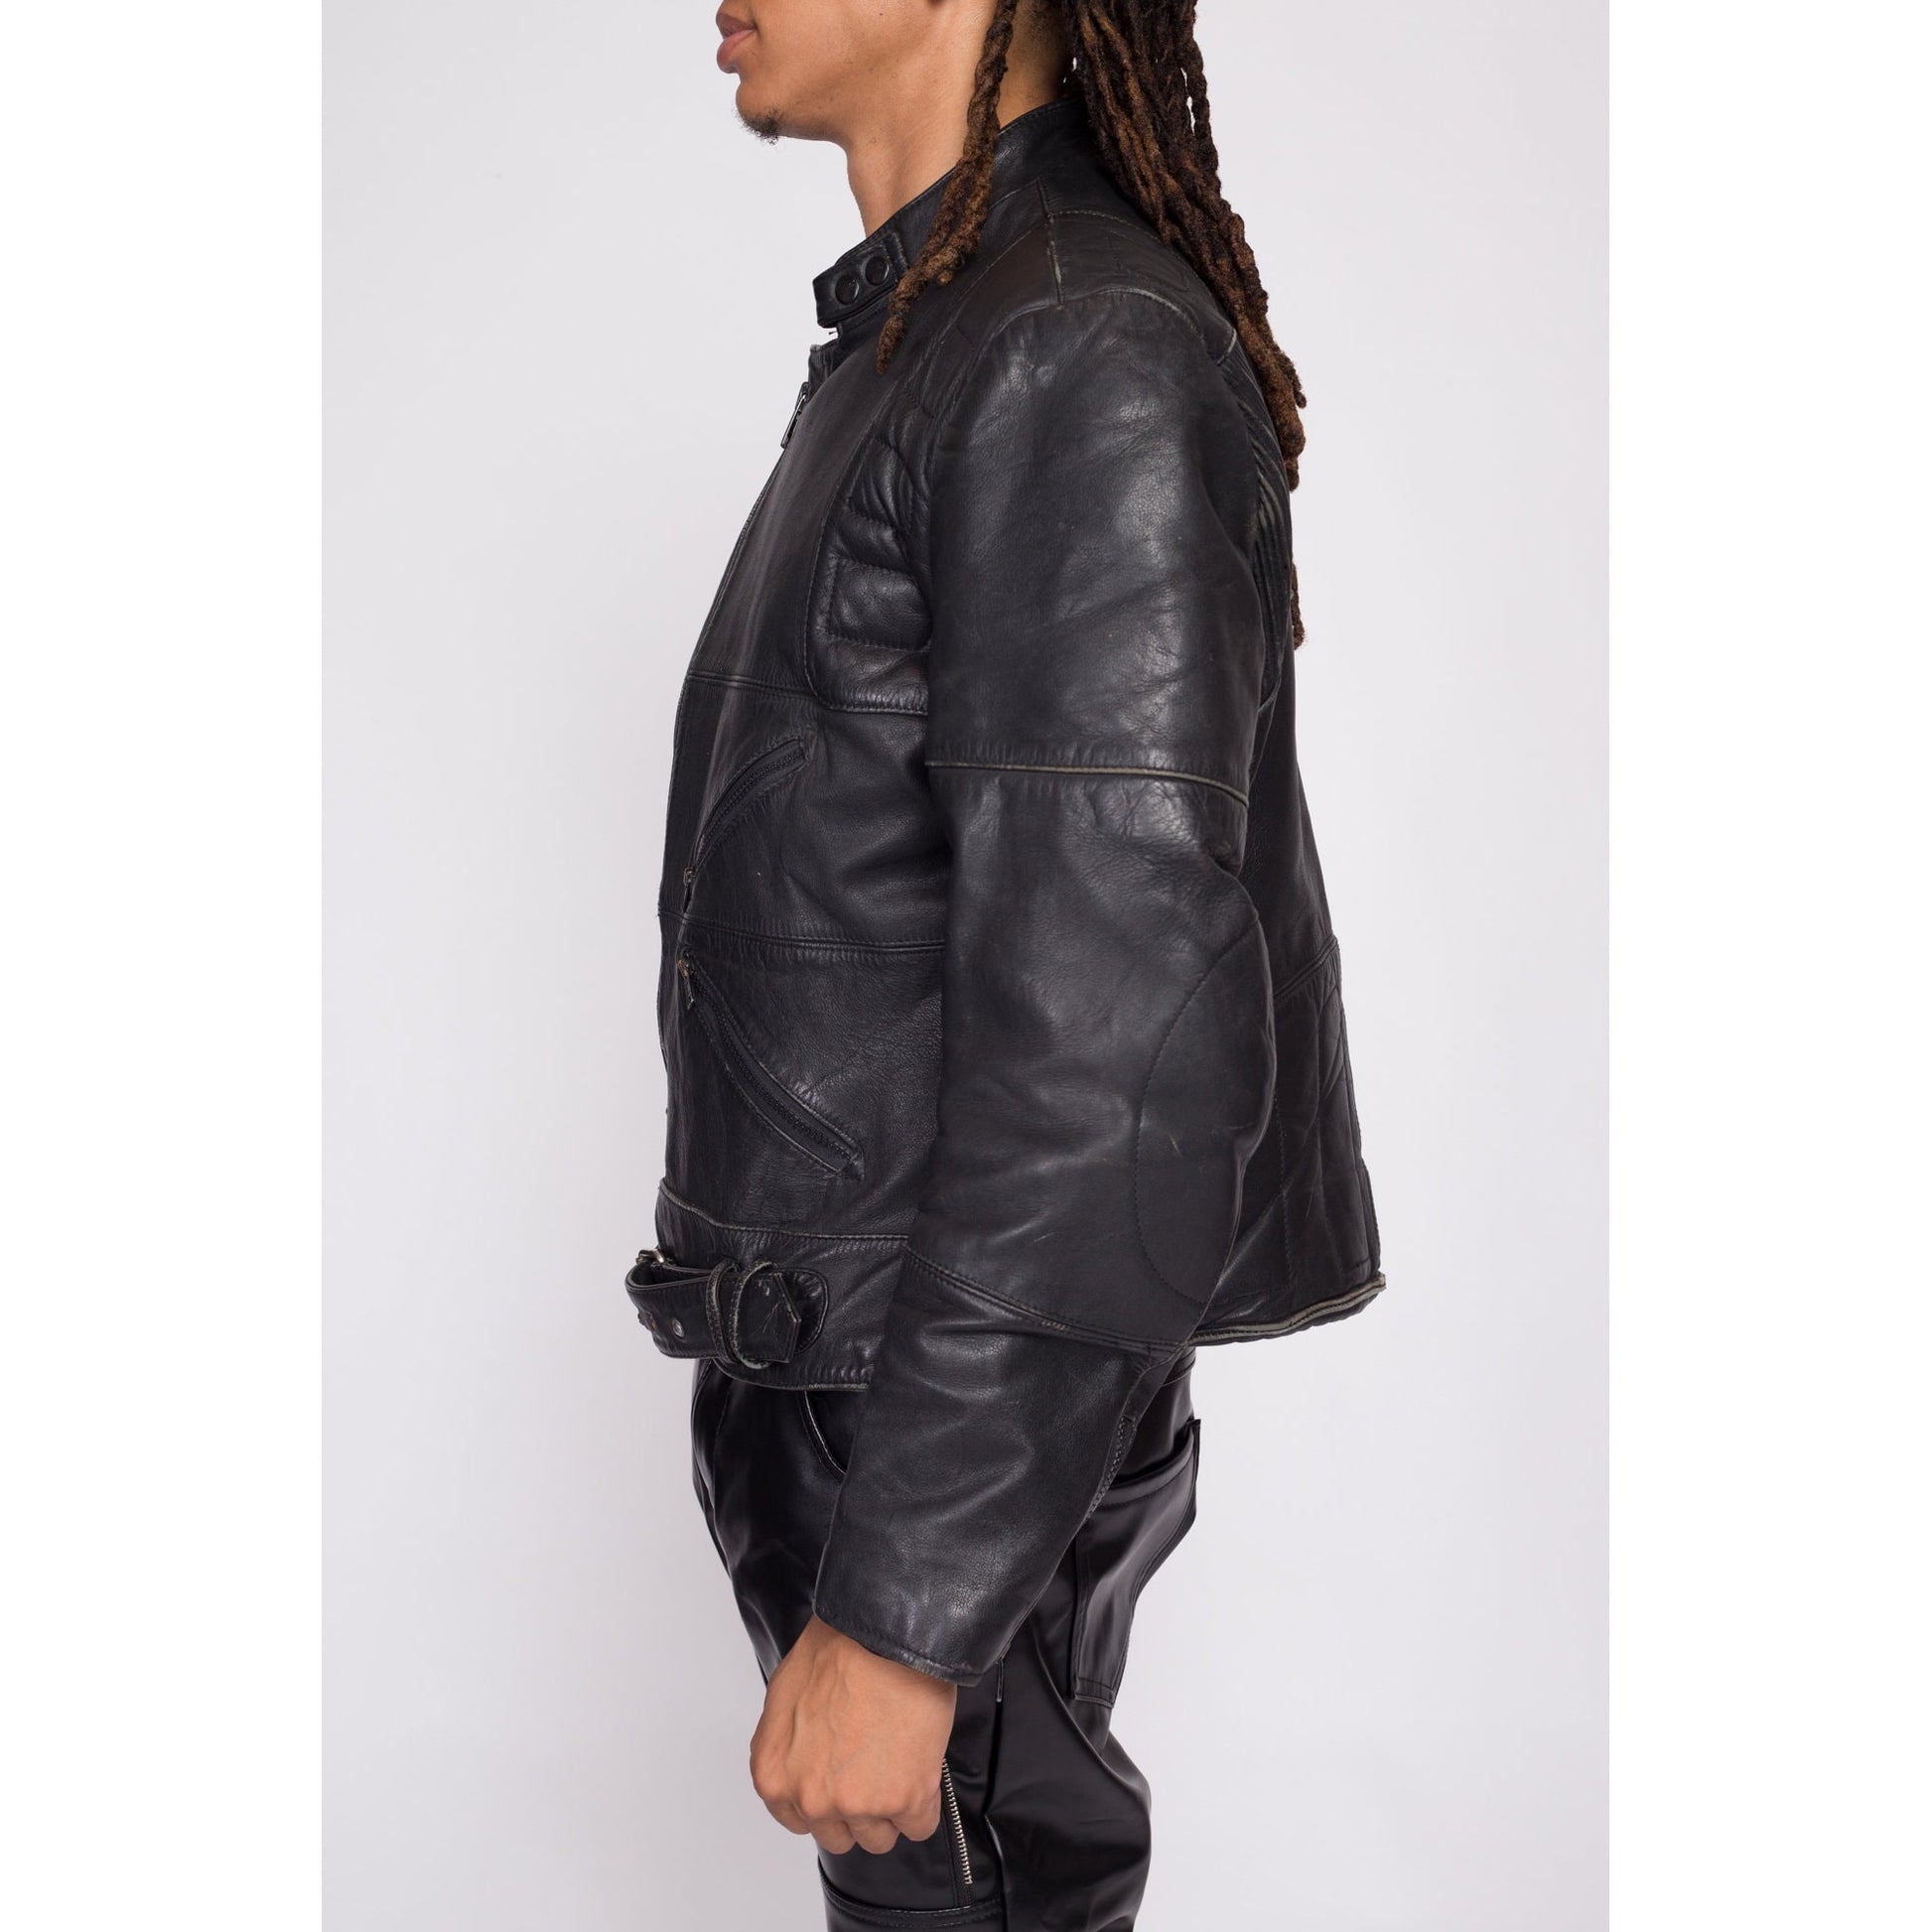 90s Leather Padded Moto Jacket - Men's Large, Size 44 Flying Apple Vintage